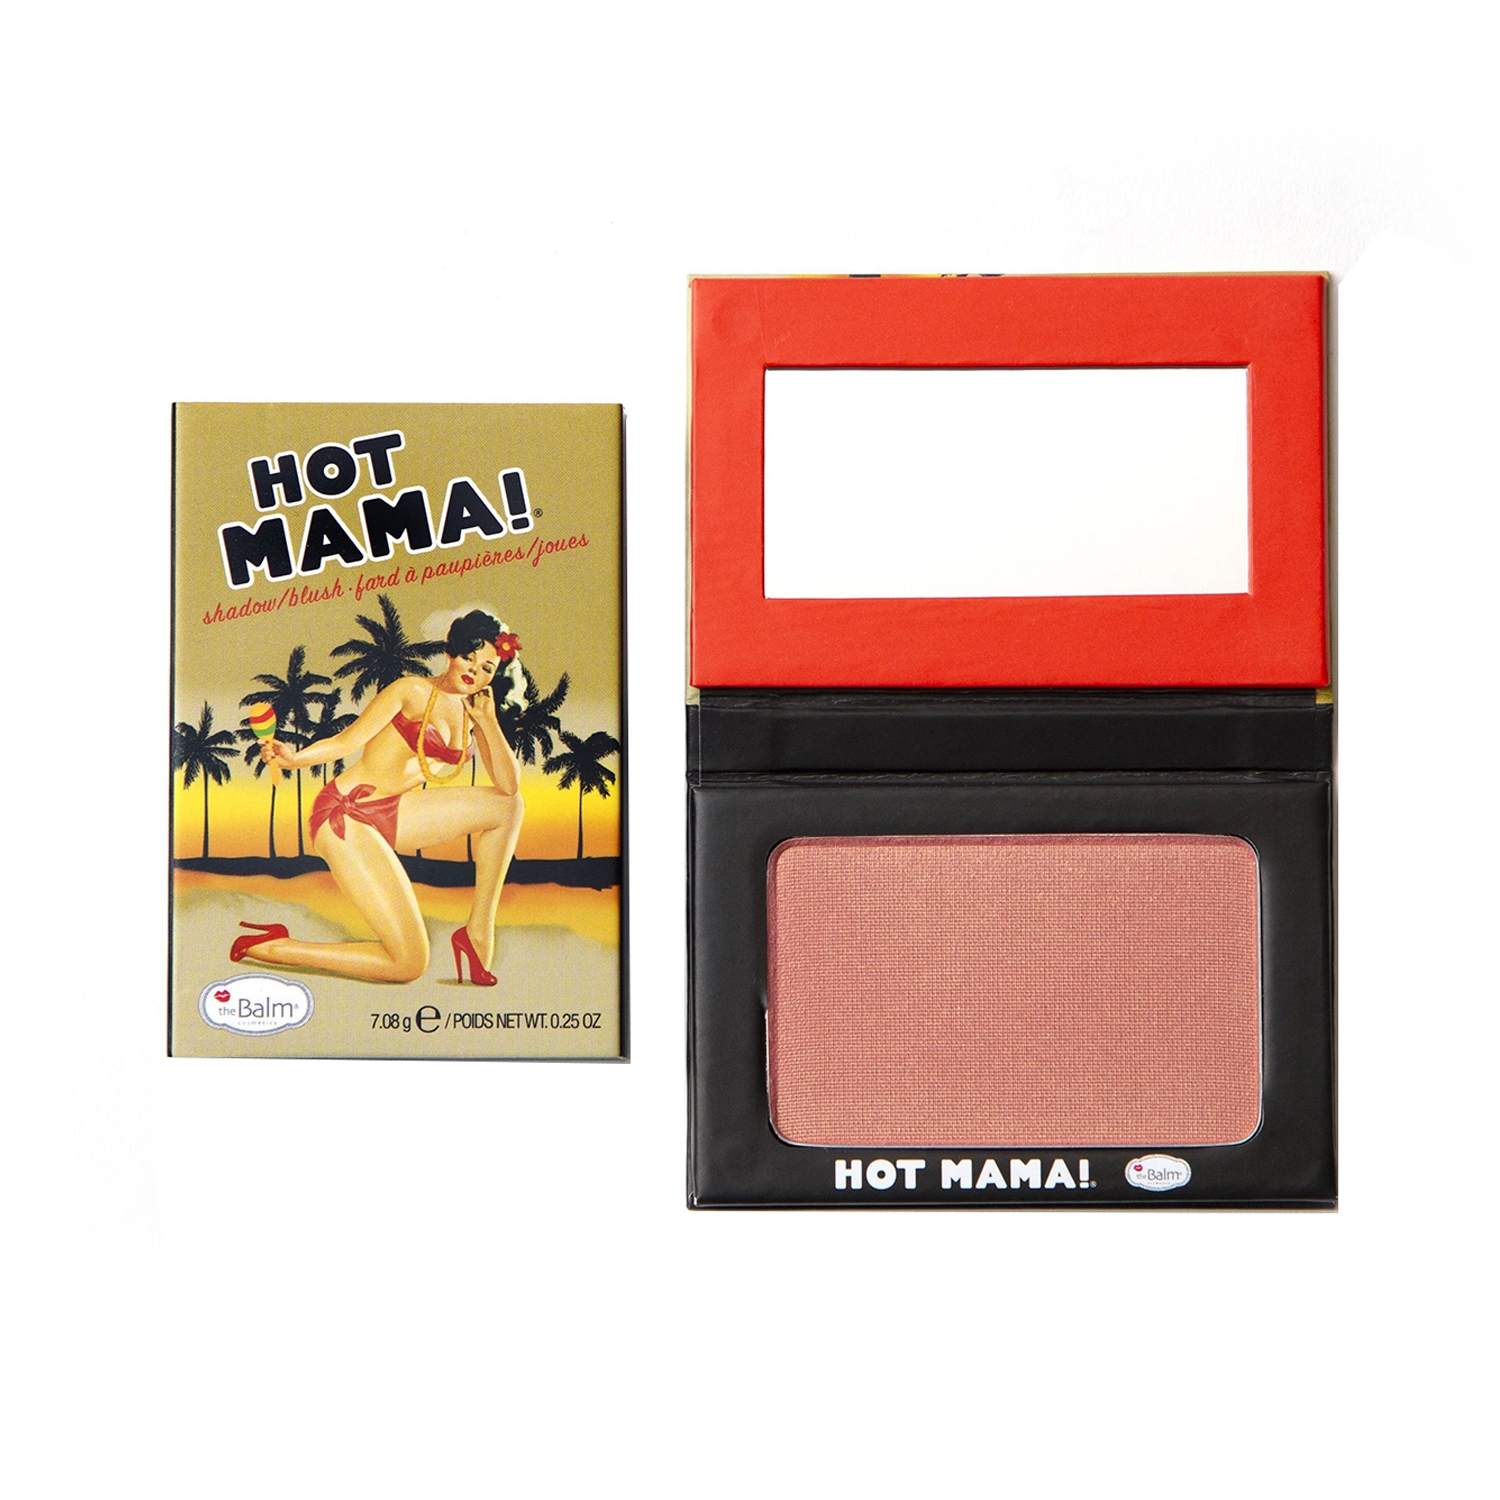 theBalm Cosmetics | theBalm Cosmetics Hot Mama Shadow And Blush - Pink (7.08g)